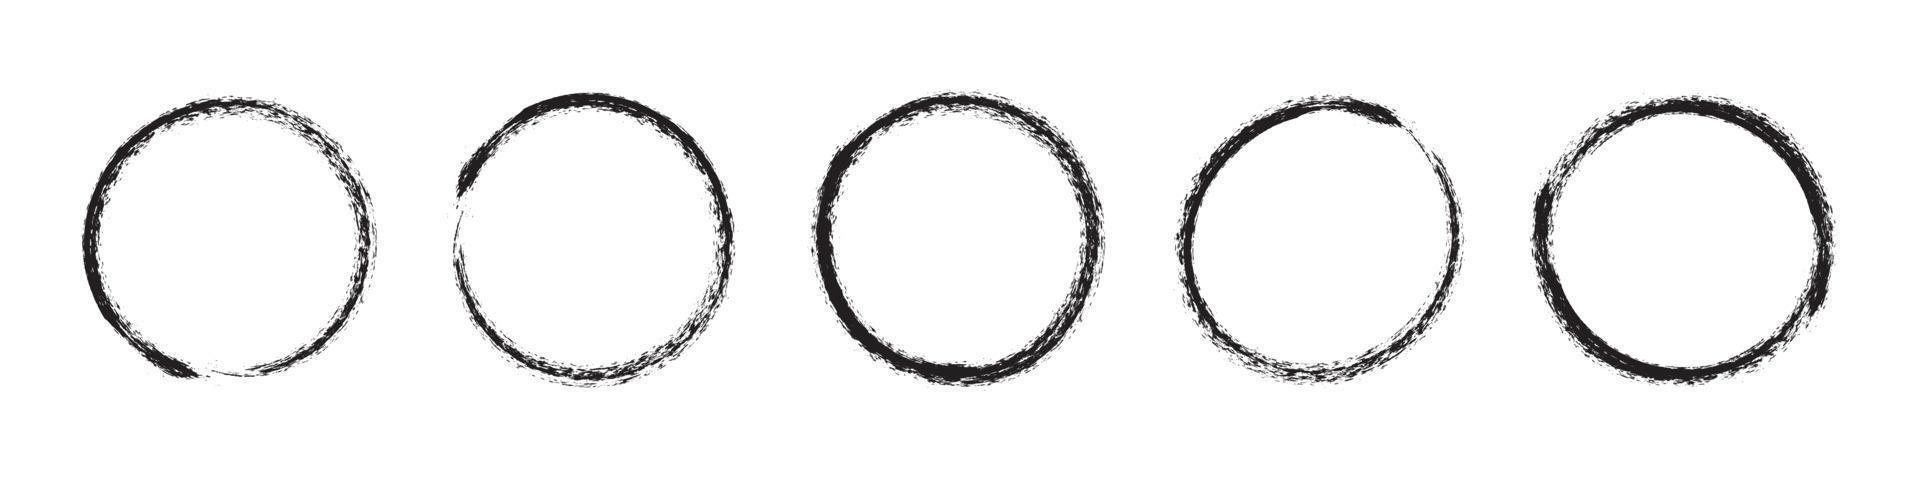 conjunto de molduras pretas redondas. pintura de pincel de círculos grunge. ilustrações vetoriais gráficas planas isoladas vetor